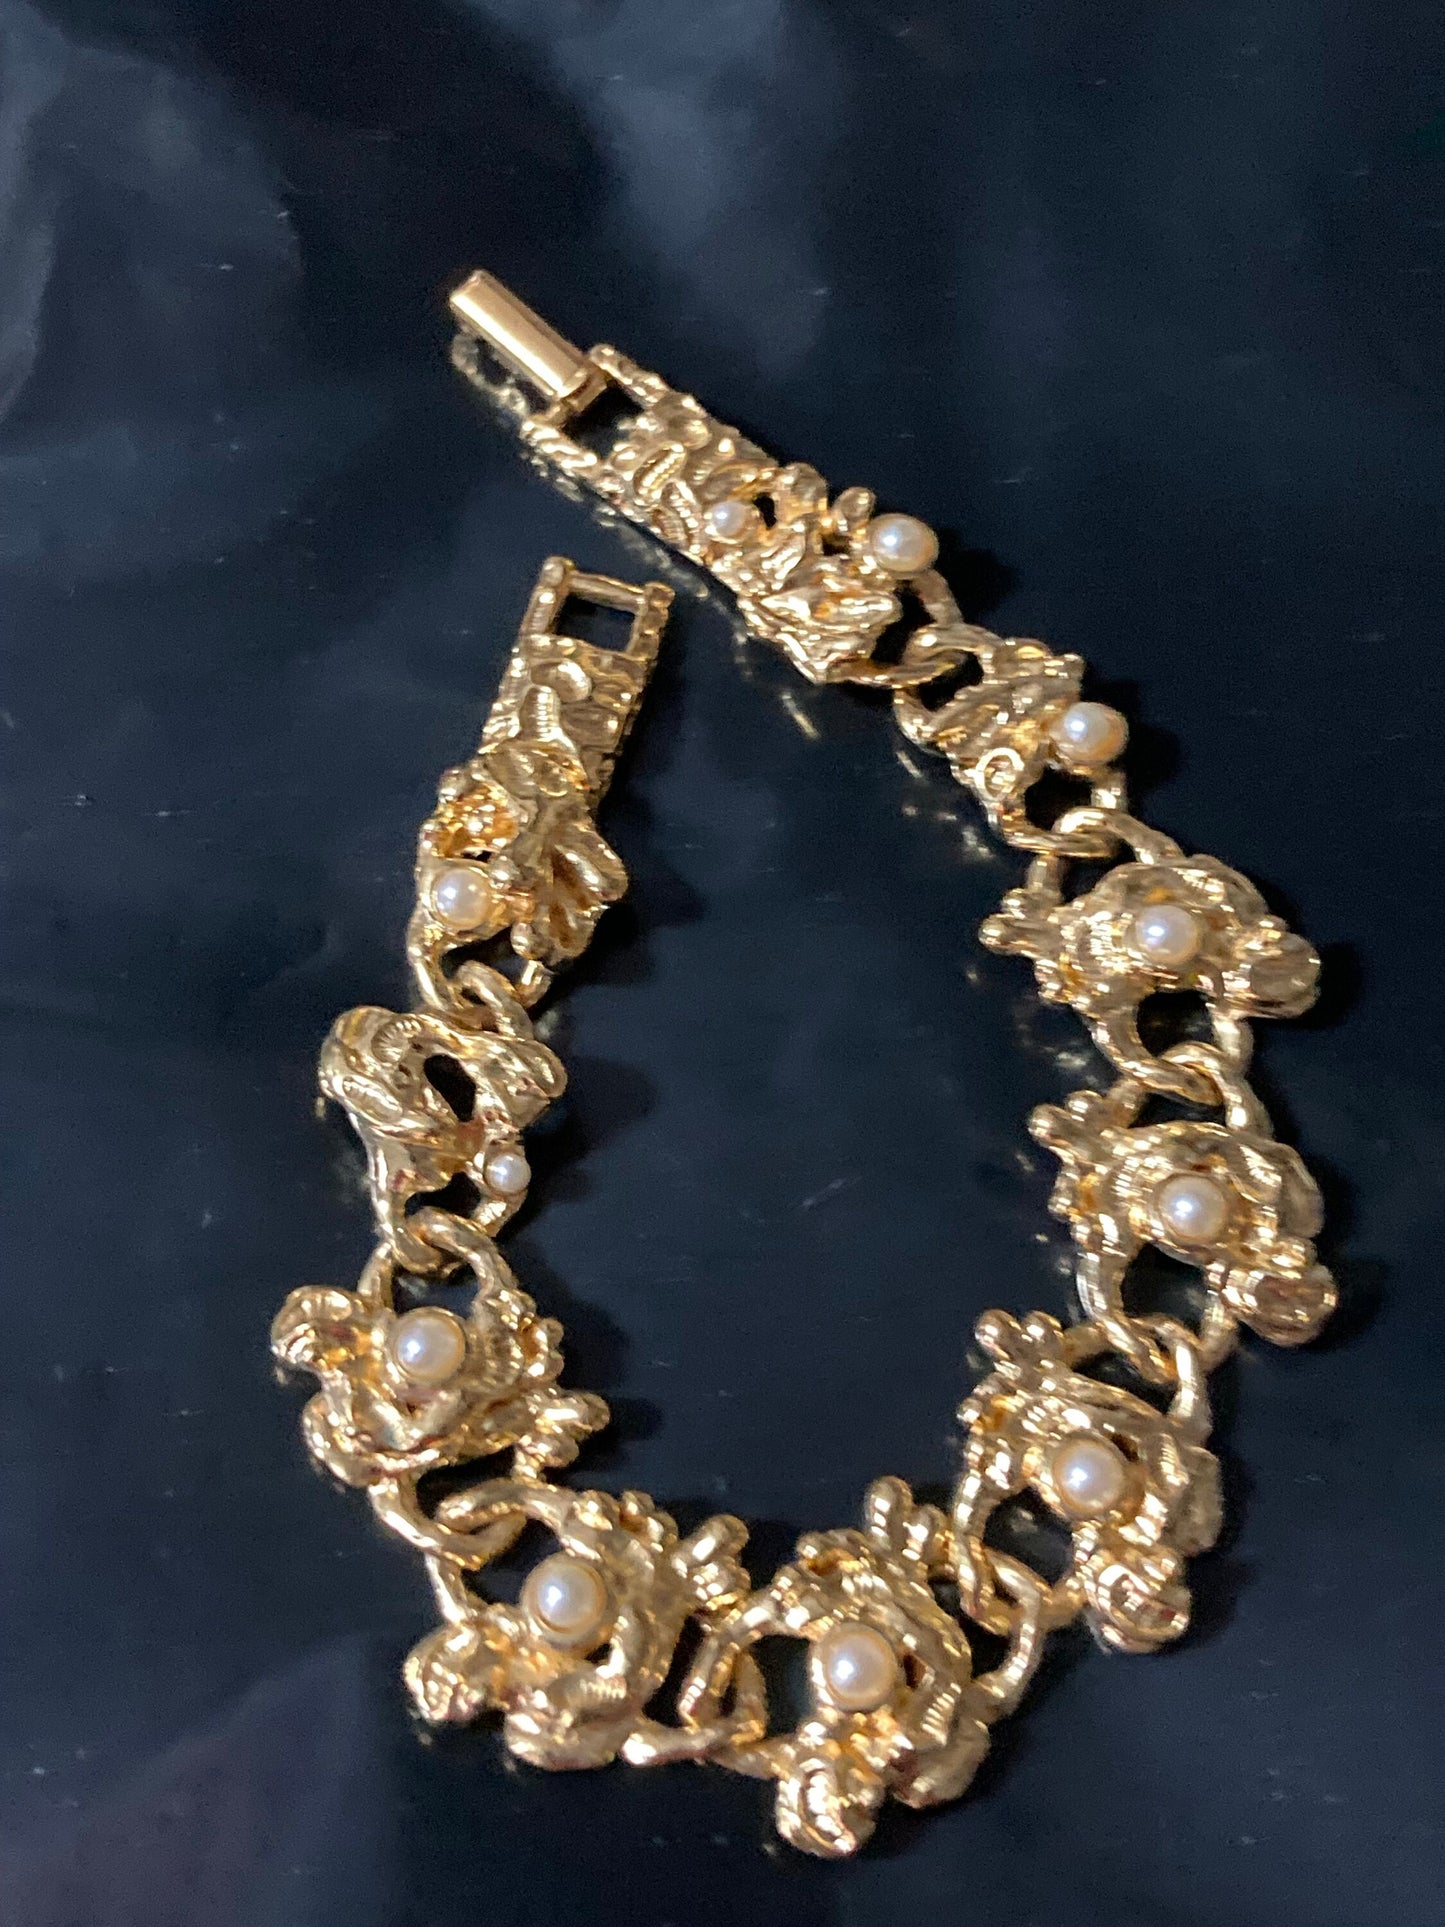 True Vintage pristine 1970s brutalist gold plated Panel link bracelet with seed pearls old shop stock